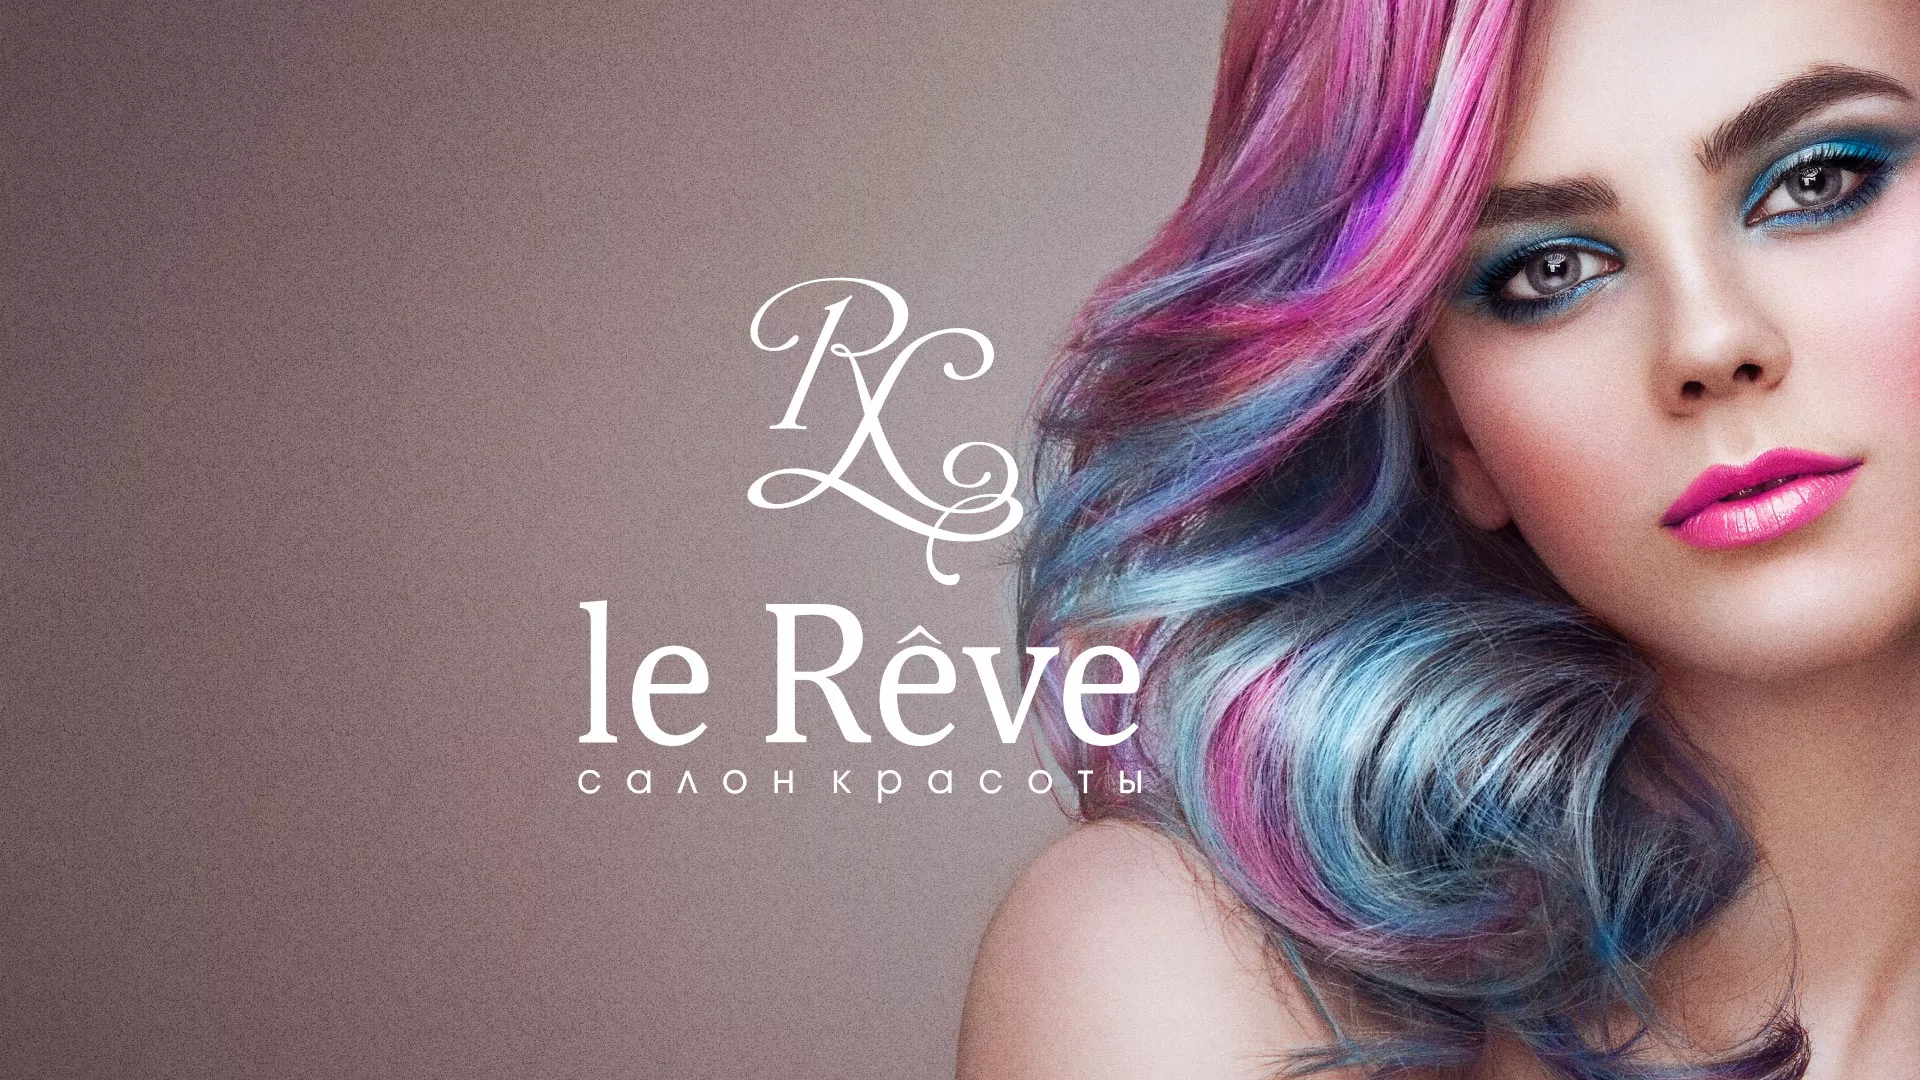 Создание сайта для салона красоты «Le Reve» в Тарусе